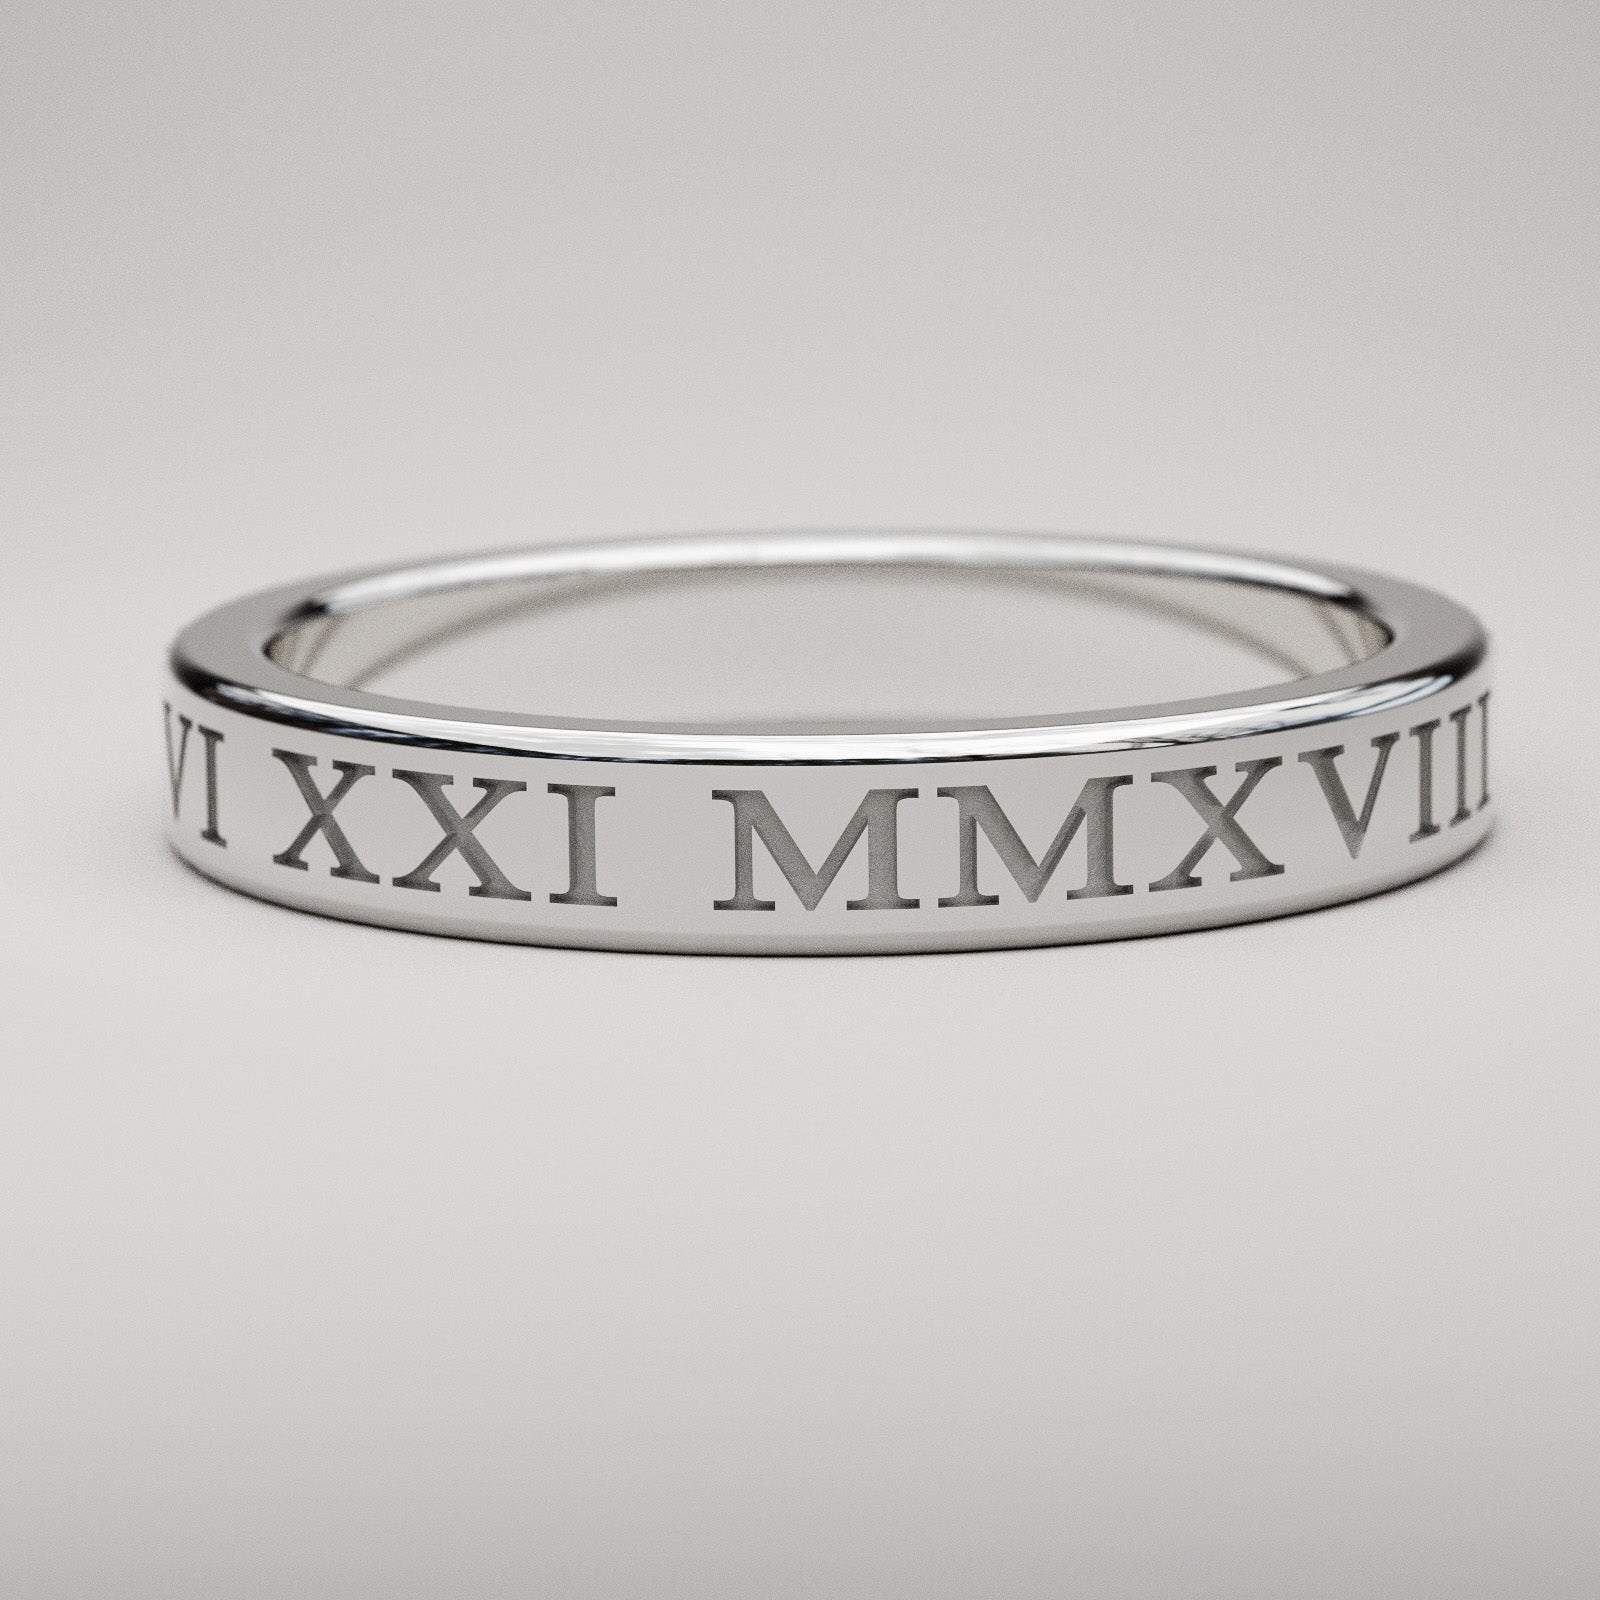 Custom date Roman Numeral ring in 14k white gold